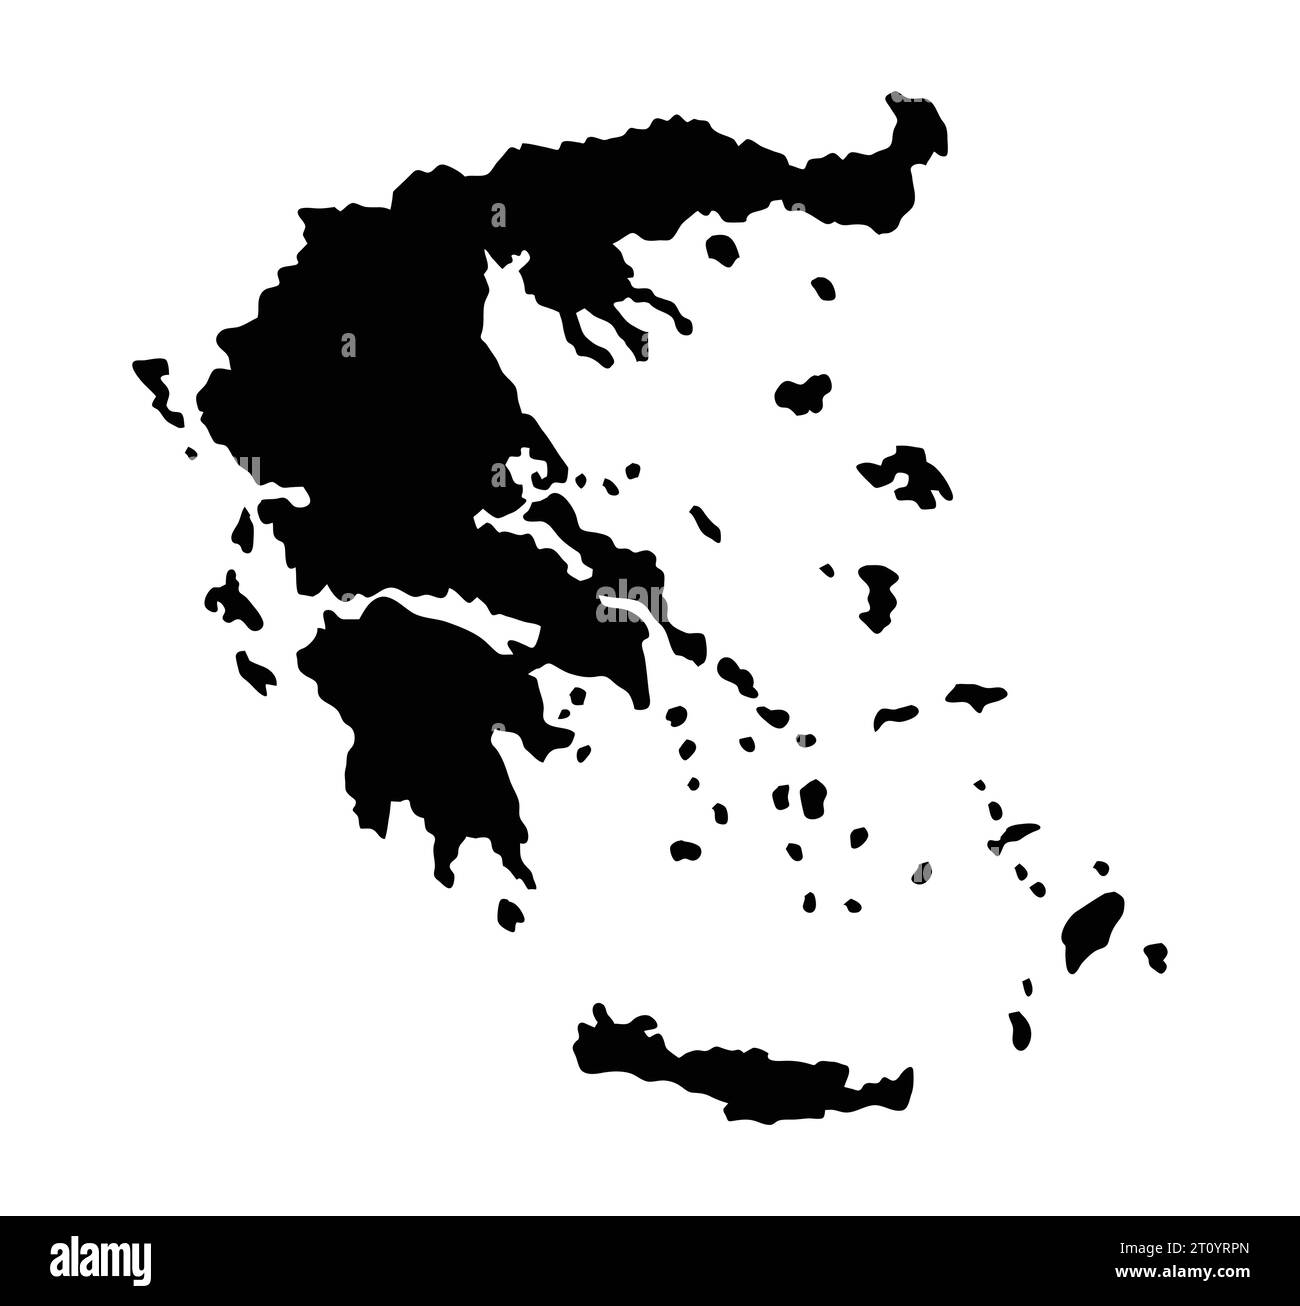 Greek greece island map silhouette region territory, black shape style illustration Stock Vector